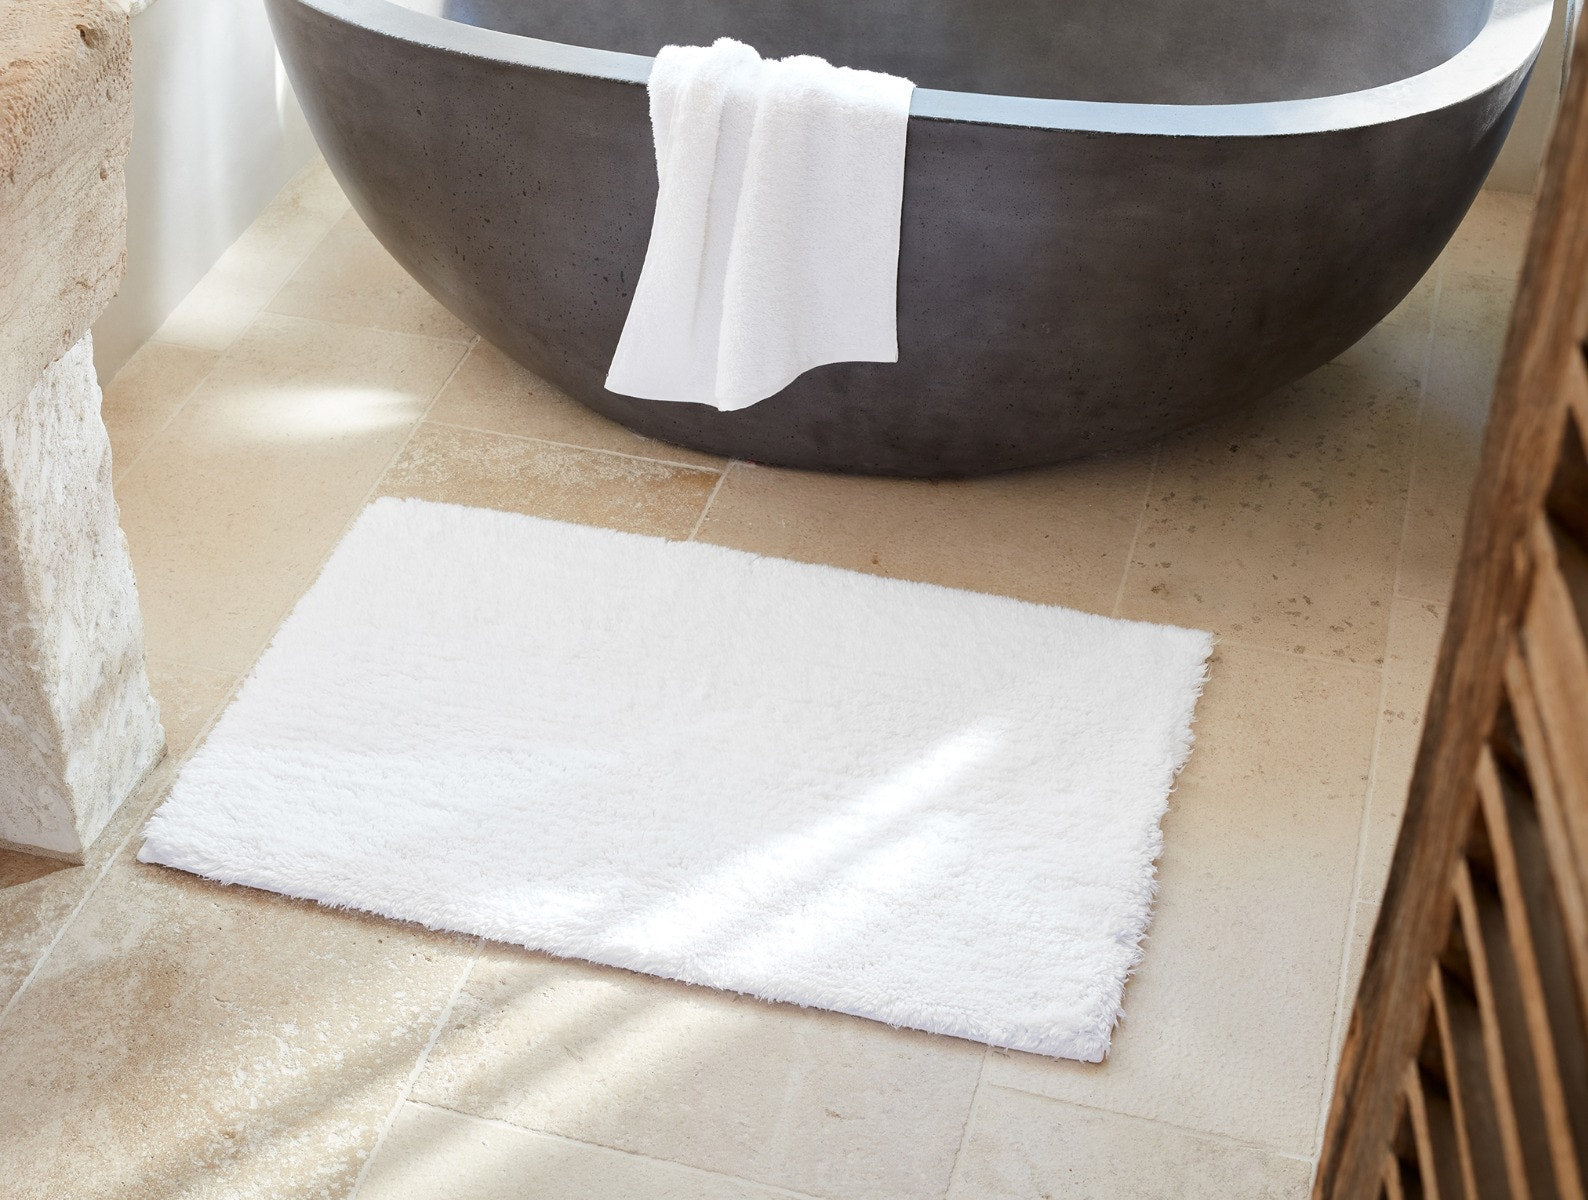 How to Create a Non-Slip Bath Mat from a Cotton Rug